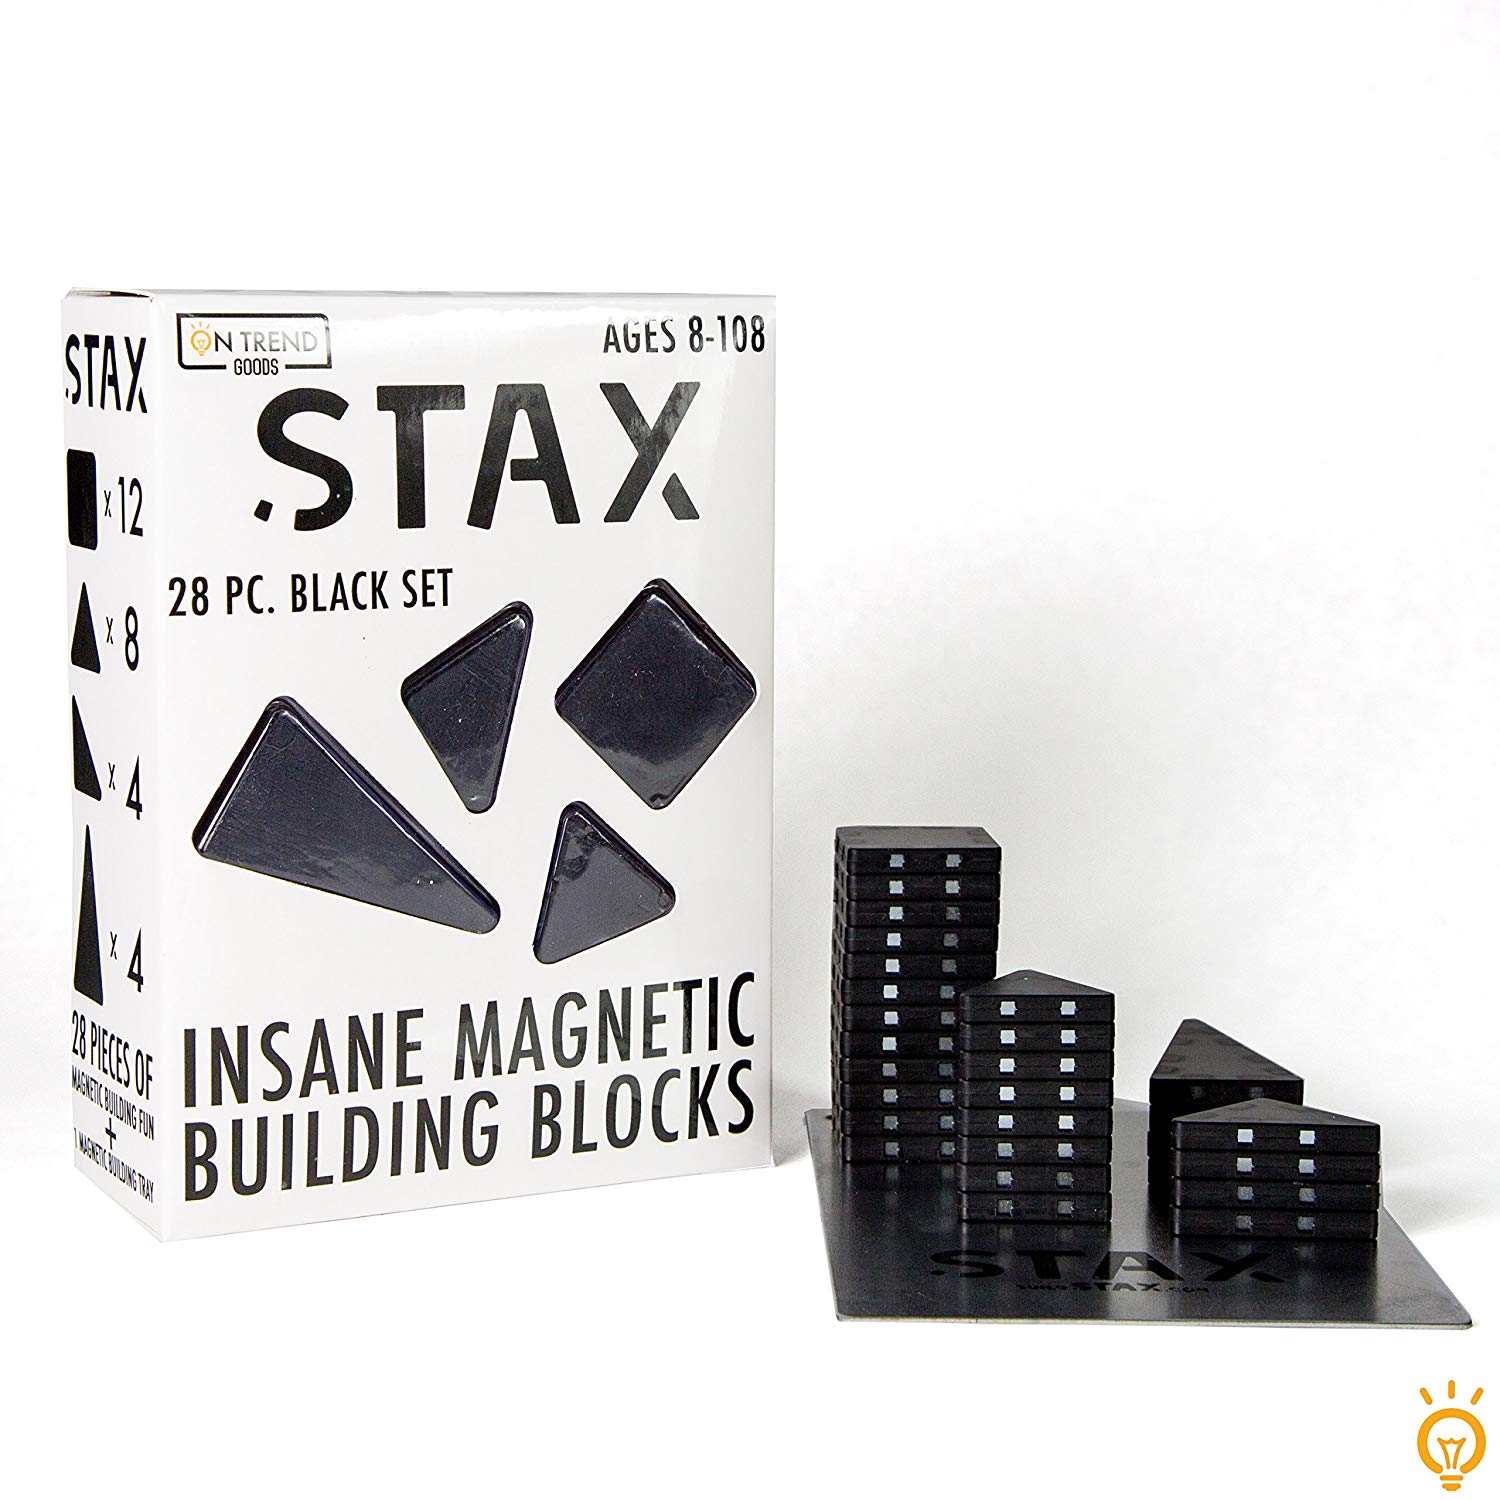 stax building blocks